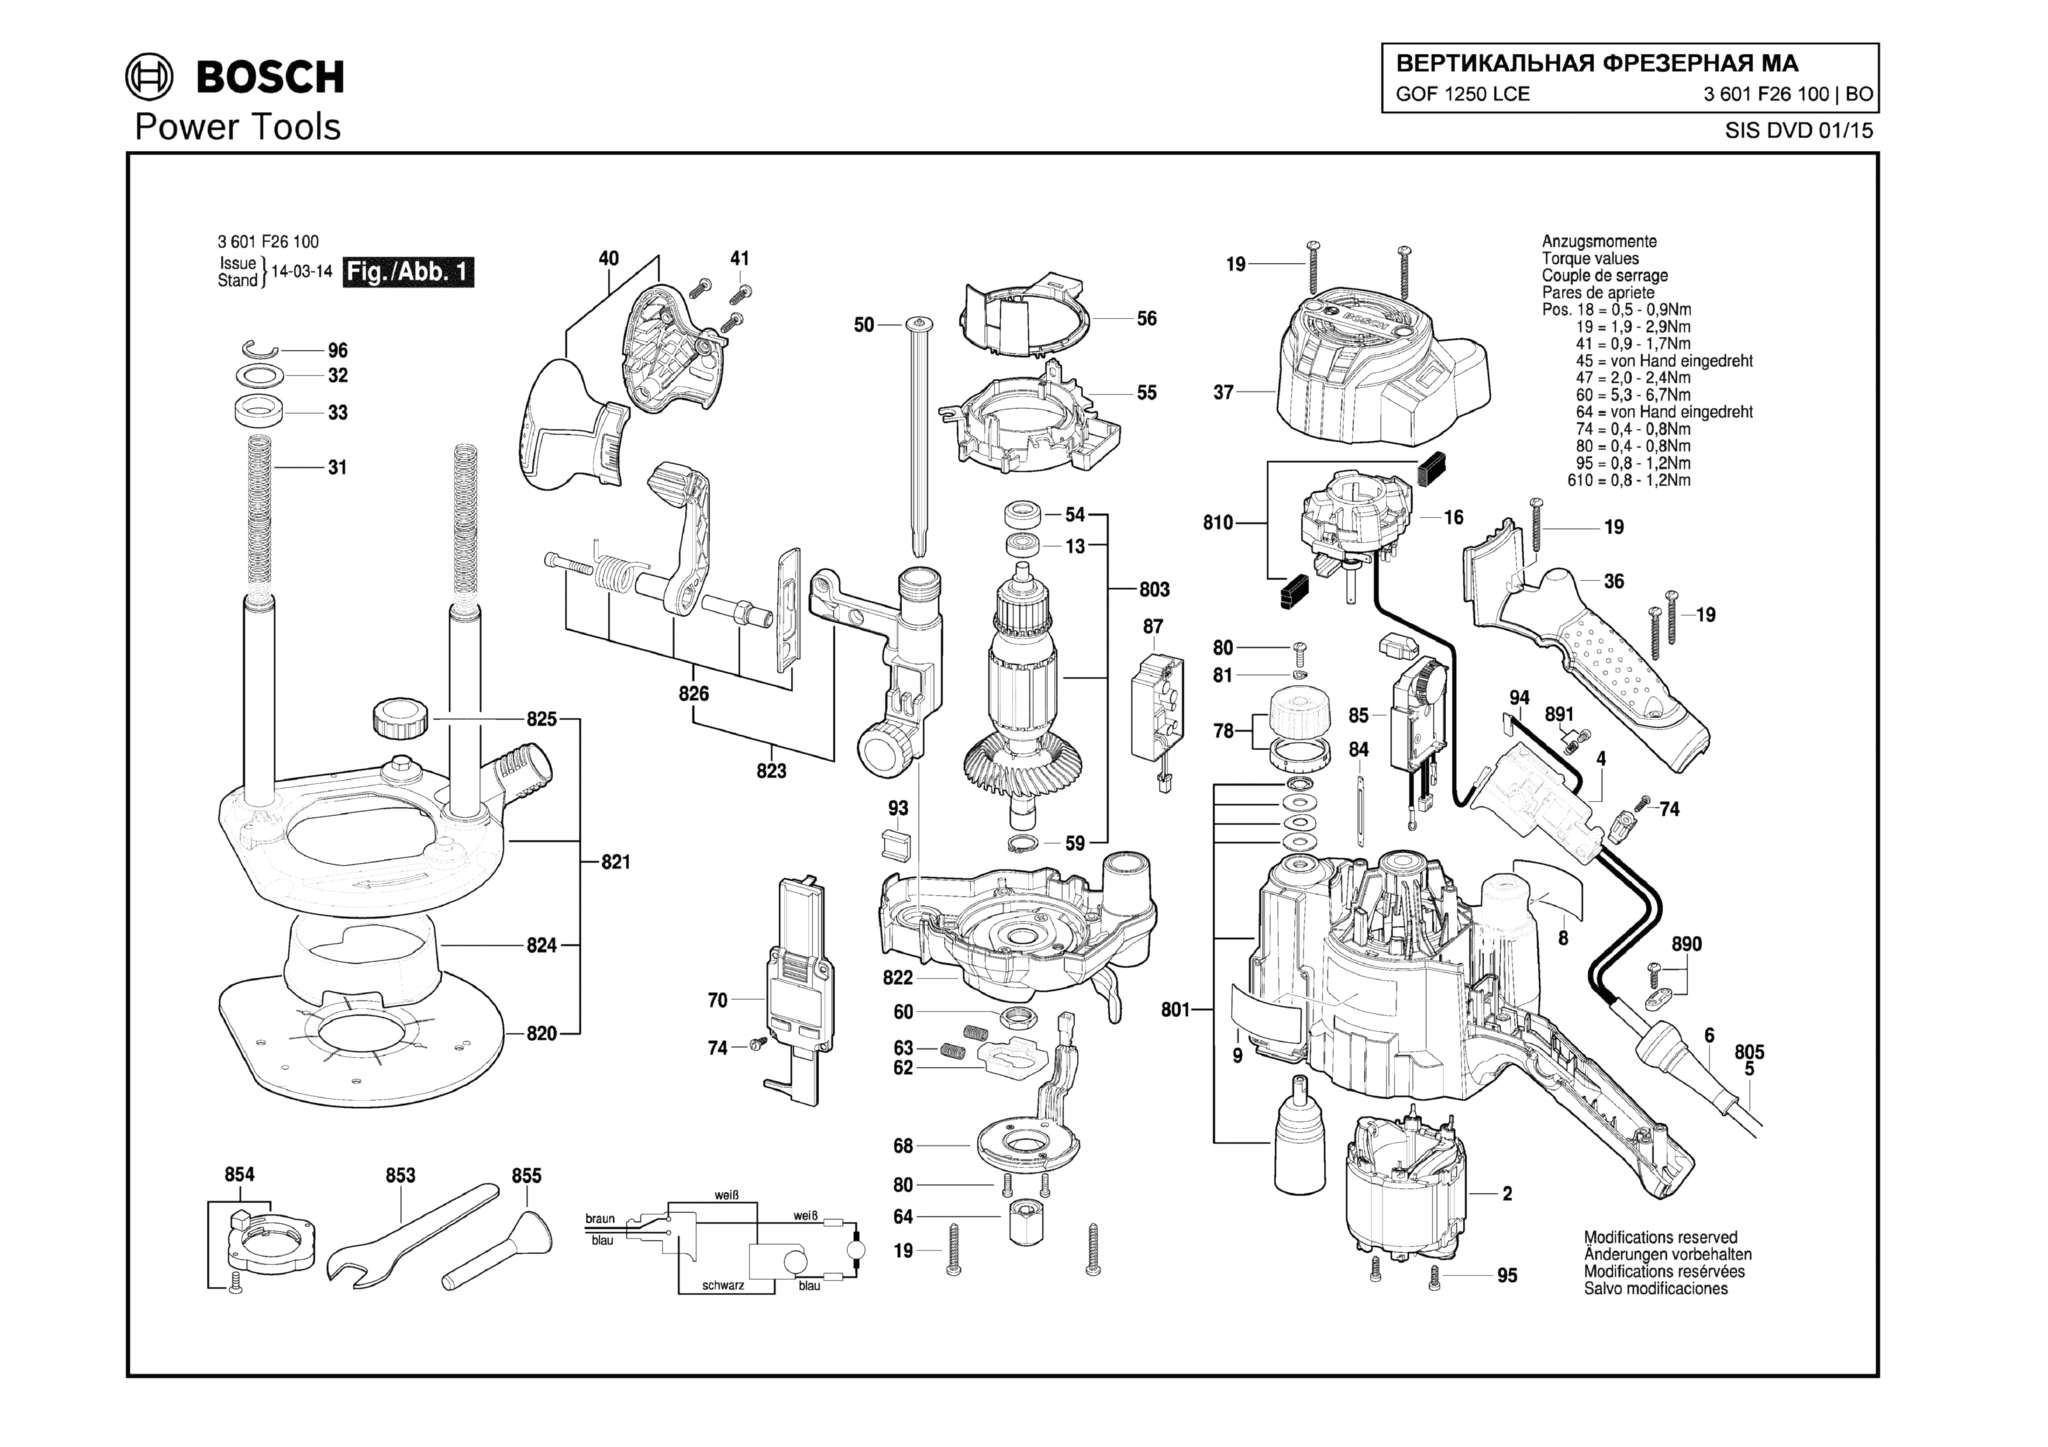 Запчасти, схема и деталировка Bosch GOF 1250 LCE (ТИП 3601F26100)